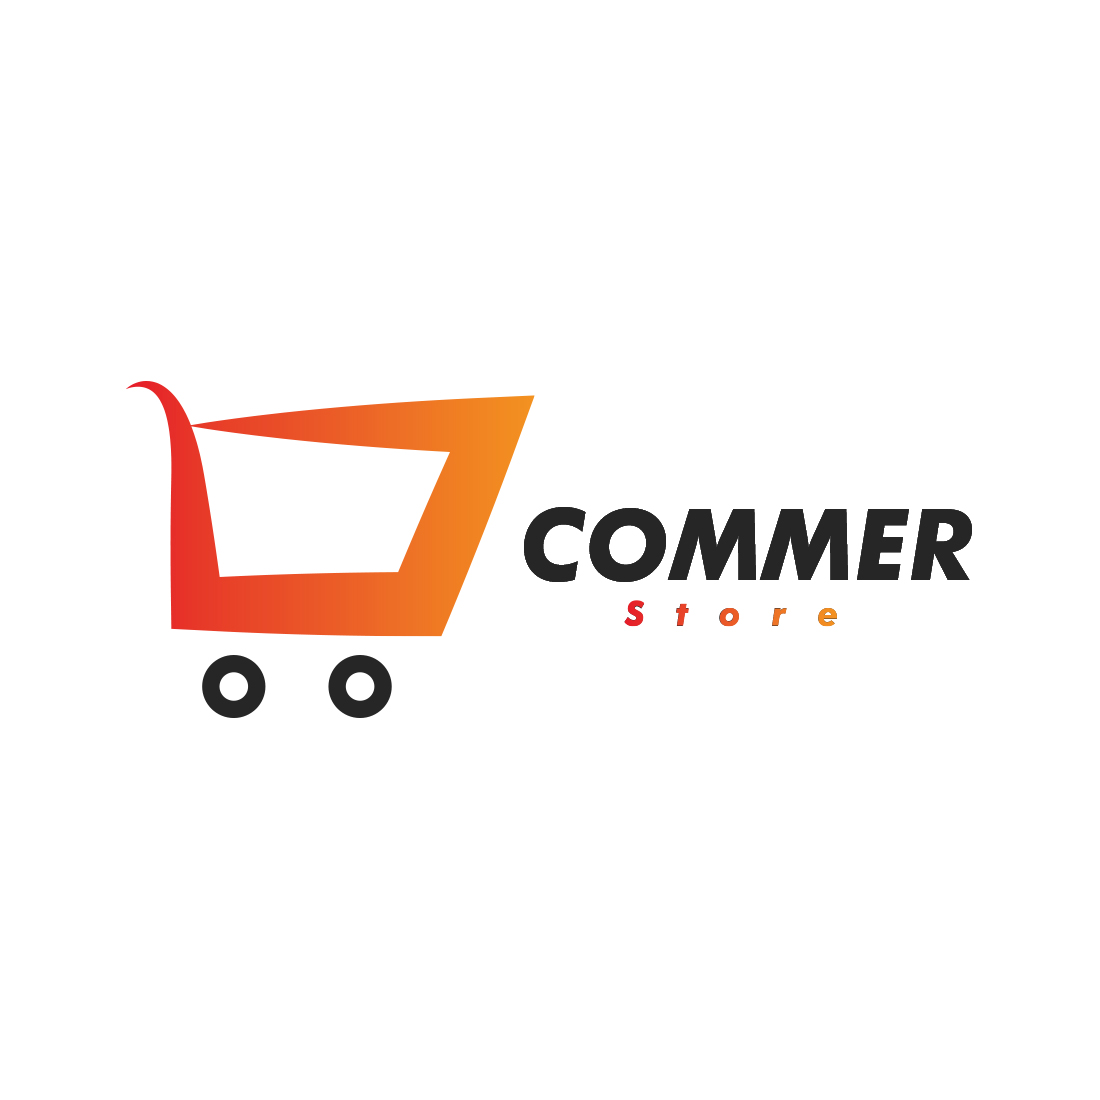 E-Commerce ( Stores ) logo design cover image.